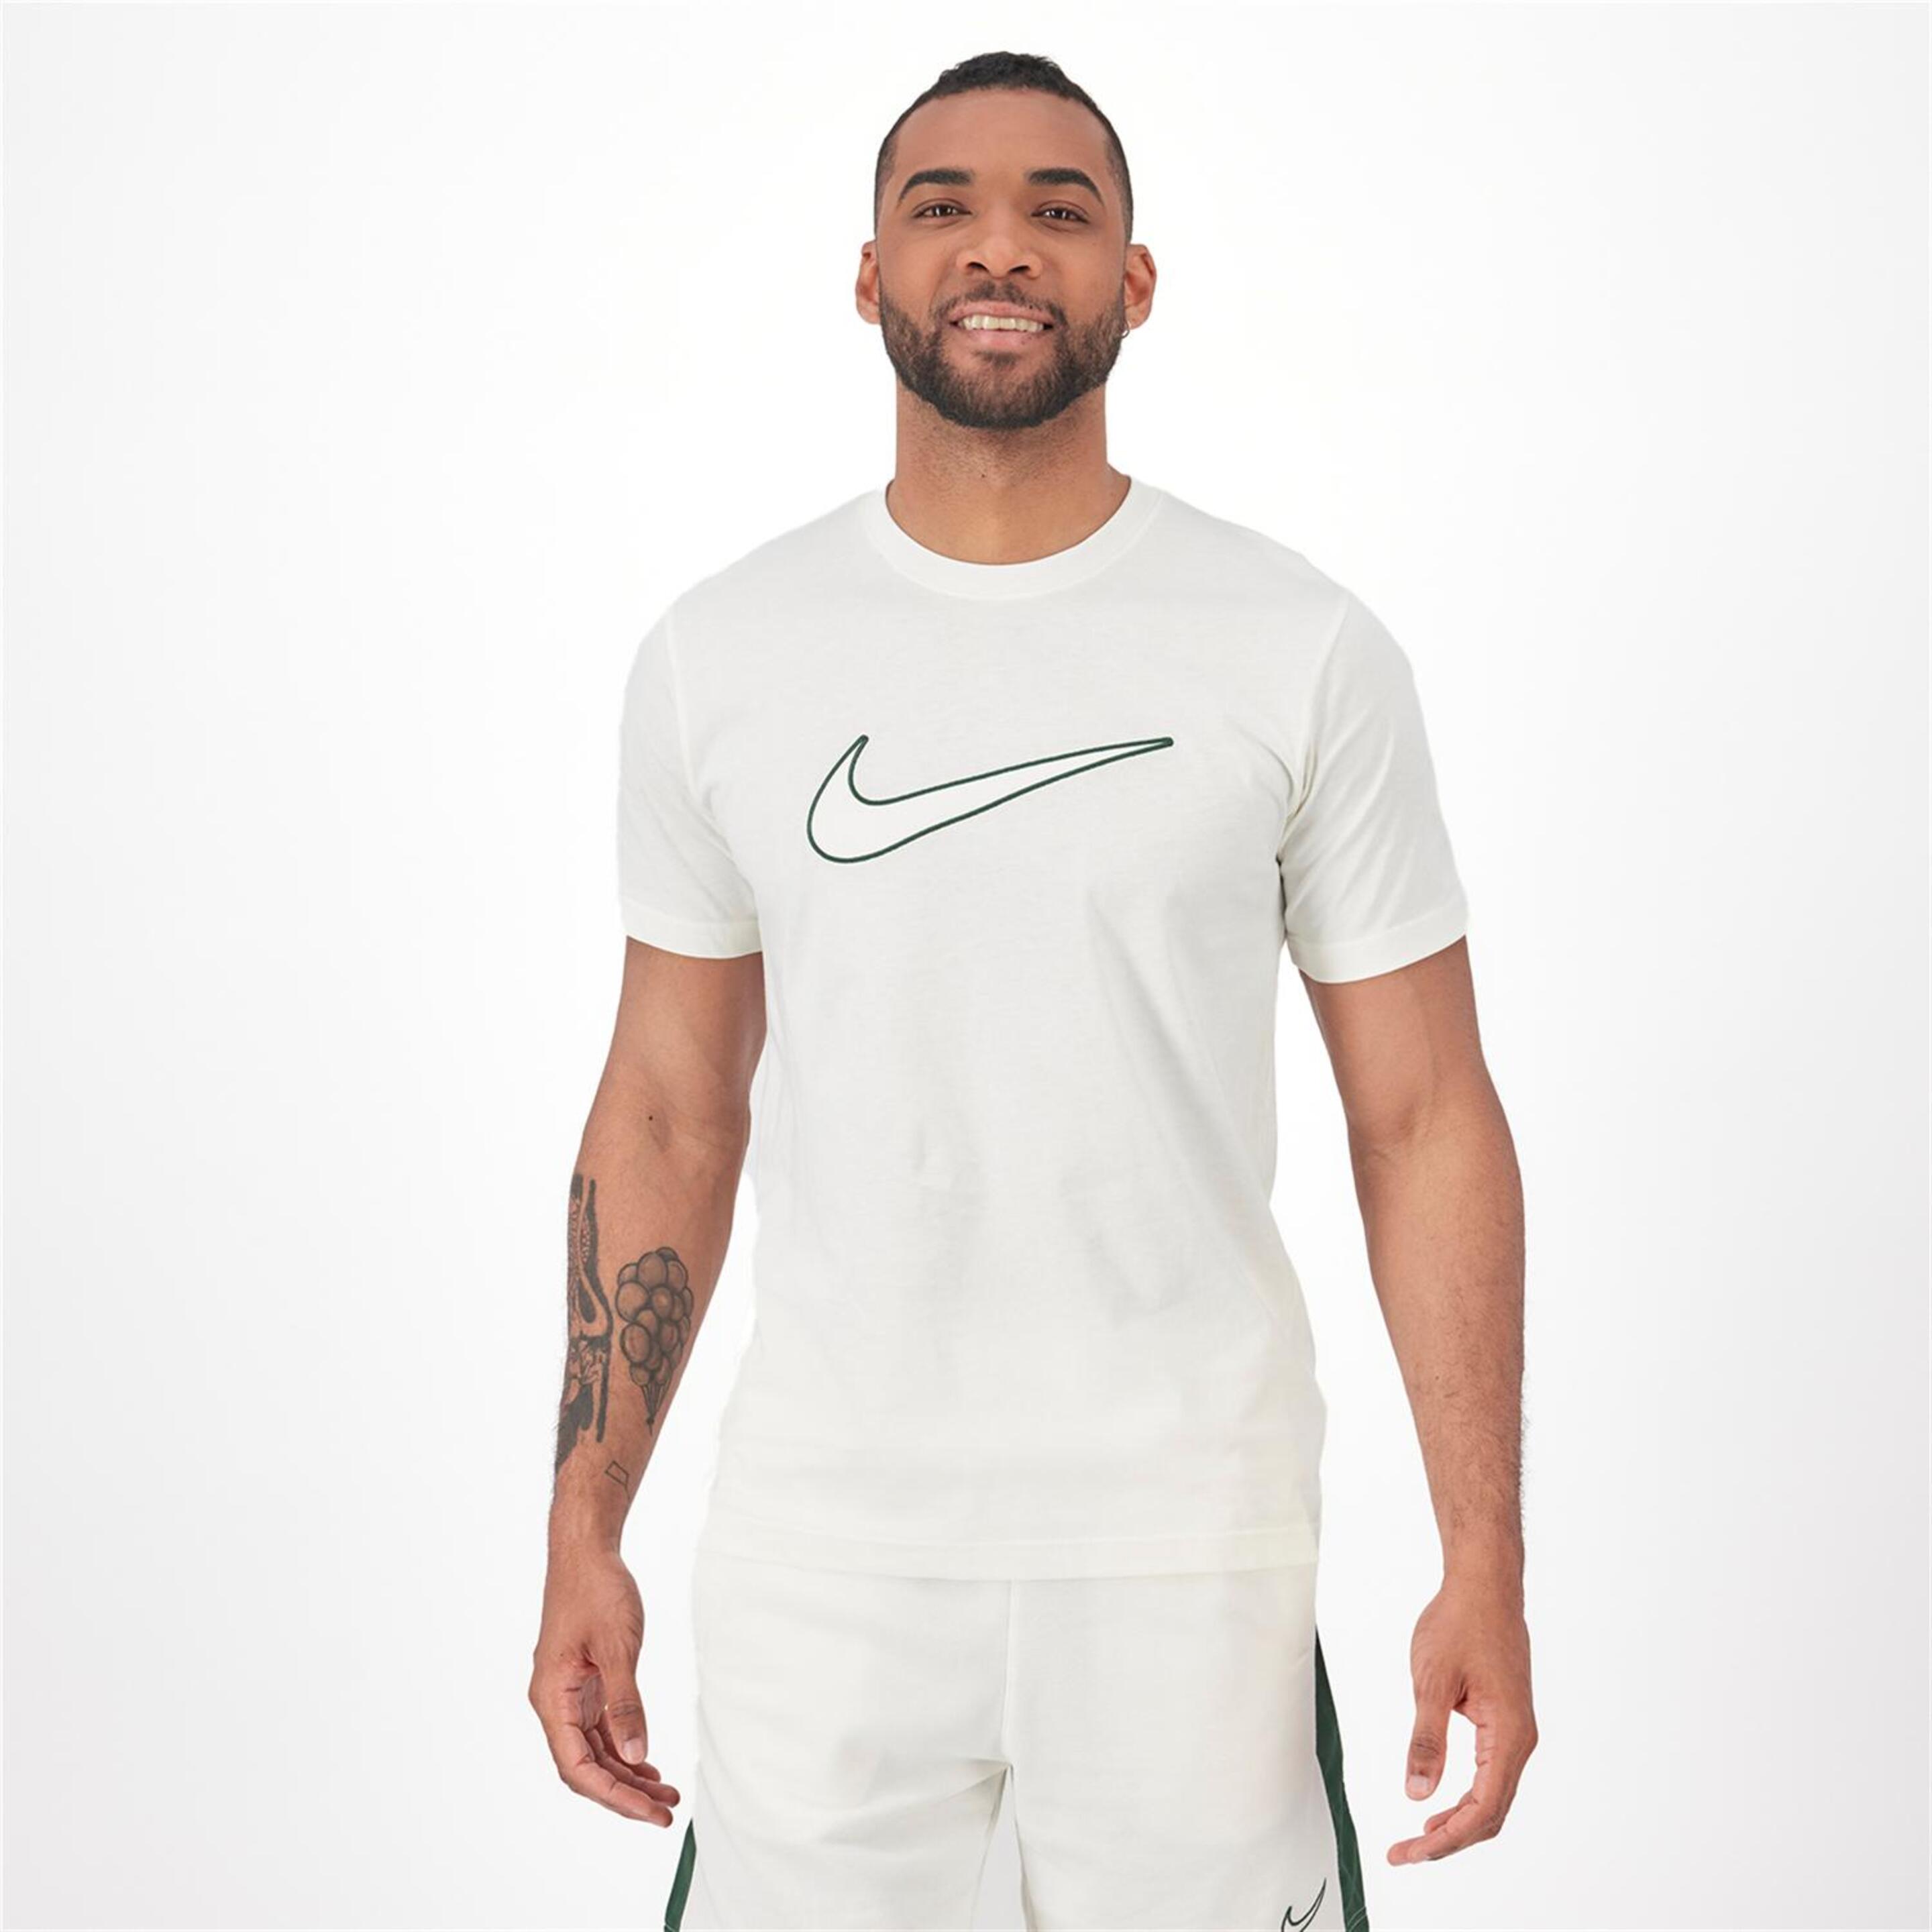 Nike Sp - blanco - Camiseta Hombre